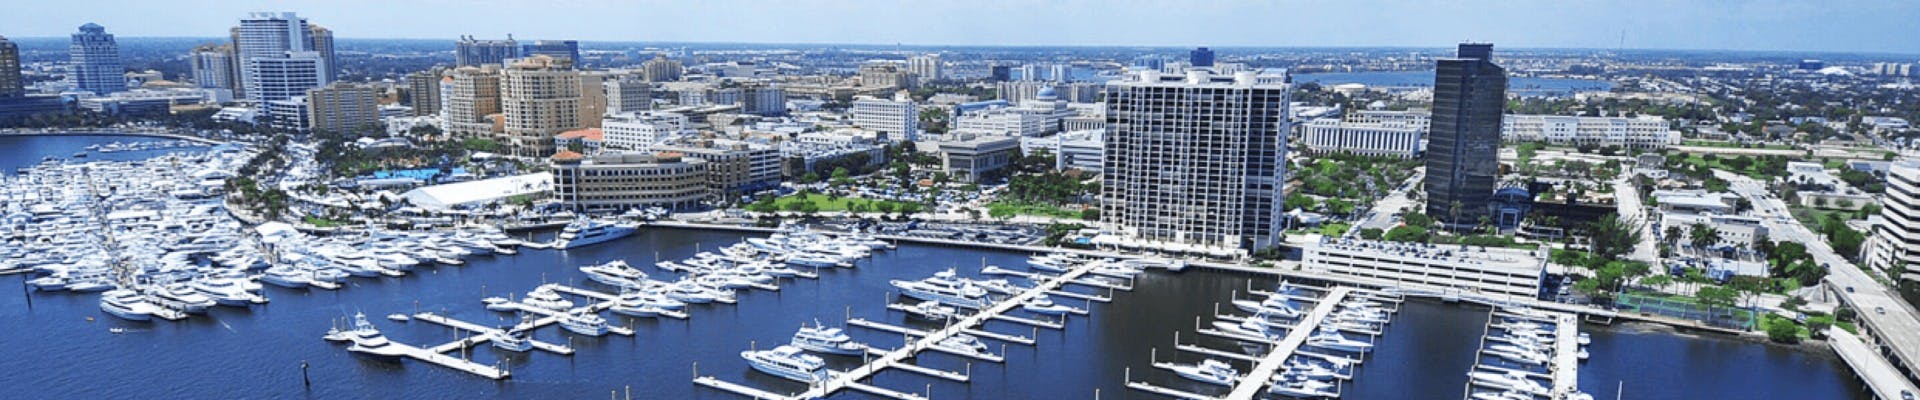 Charter a Yacht in Palm Beach, FL